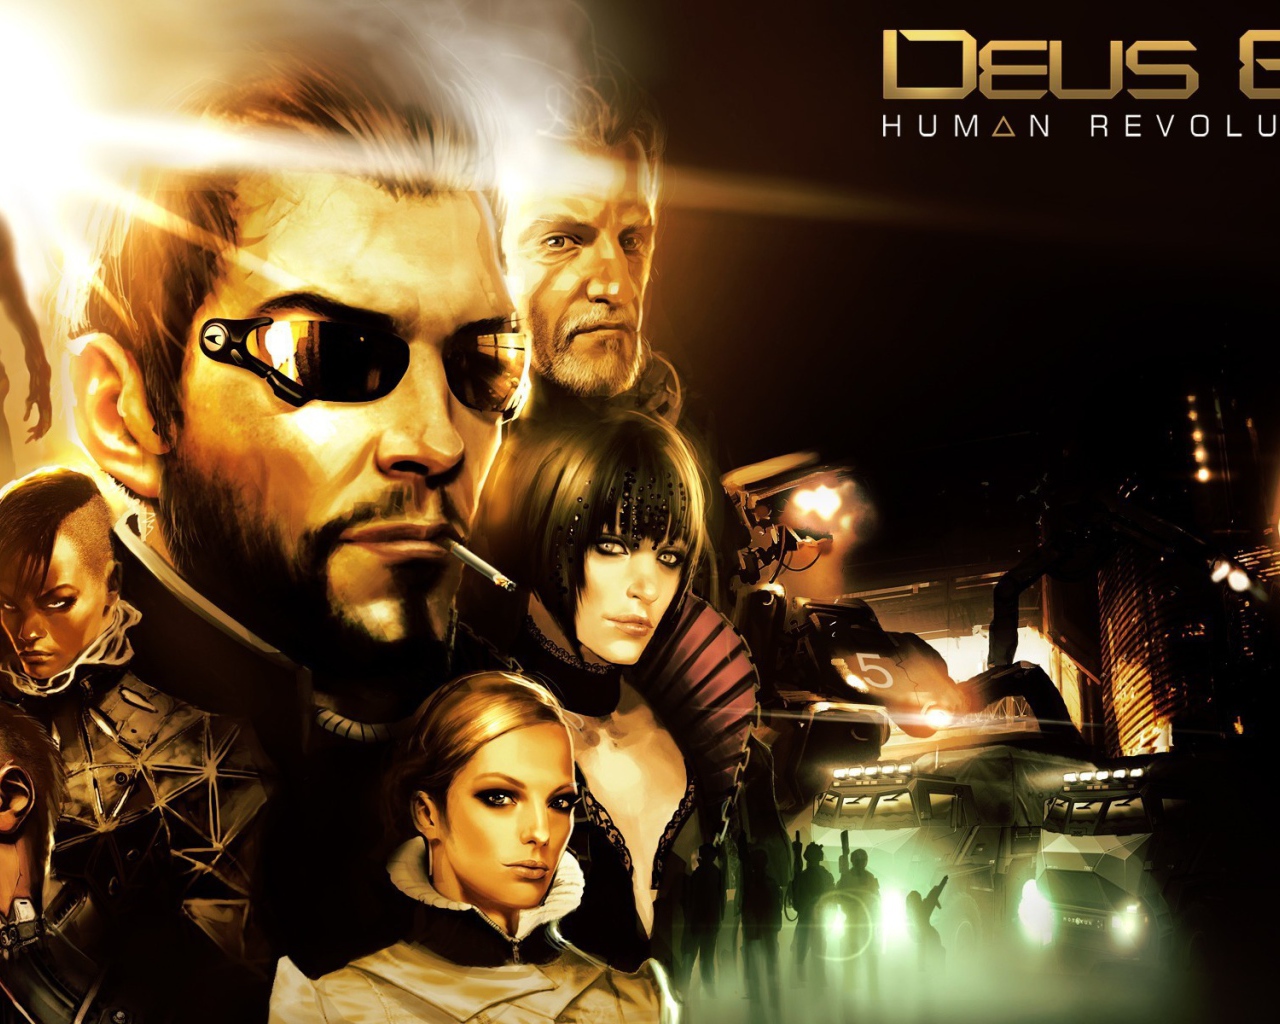 Computer game Deus Ex Human Revolution